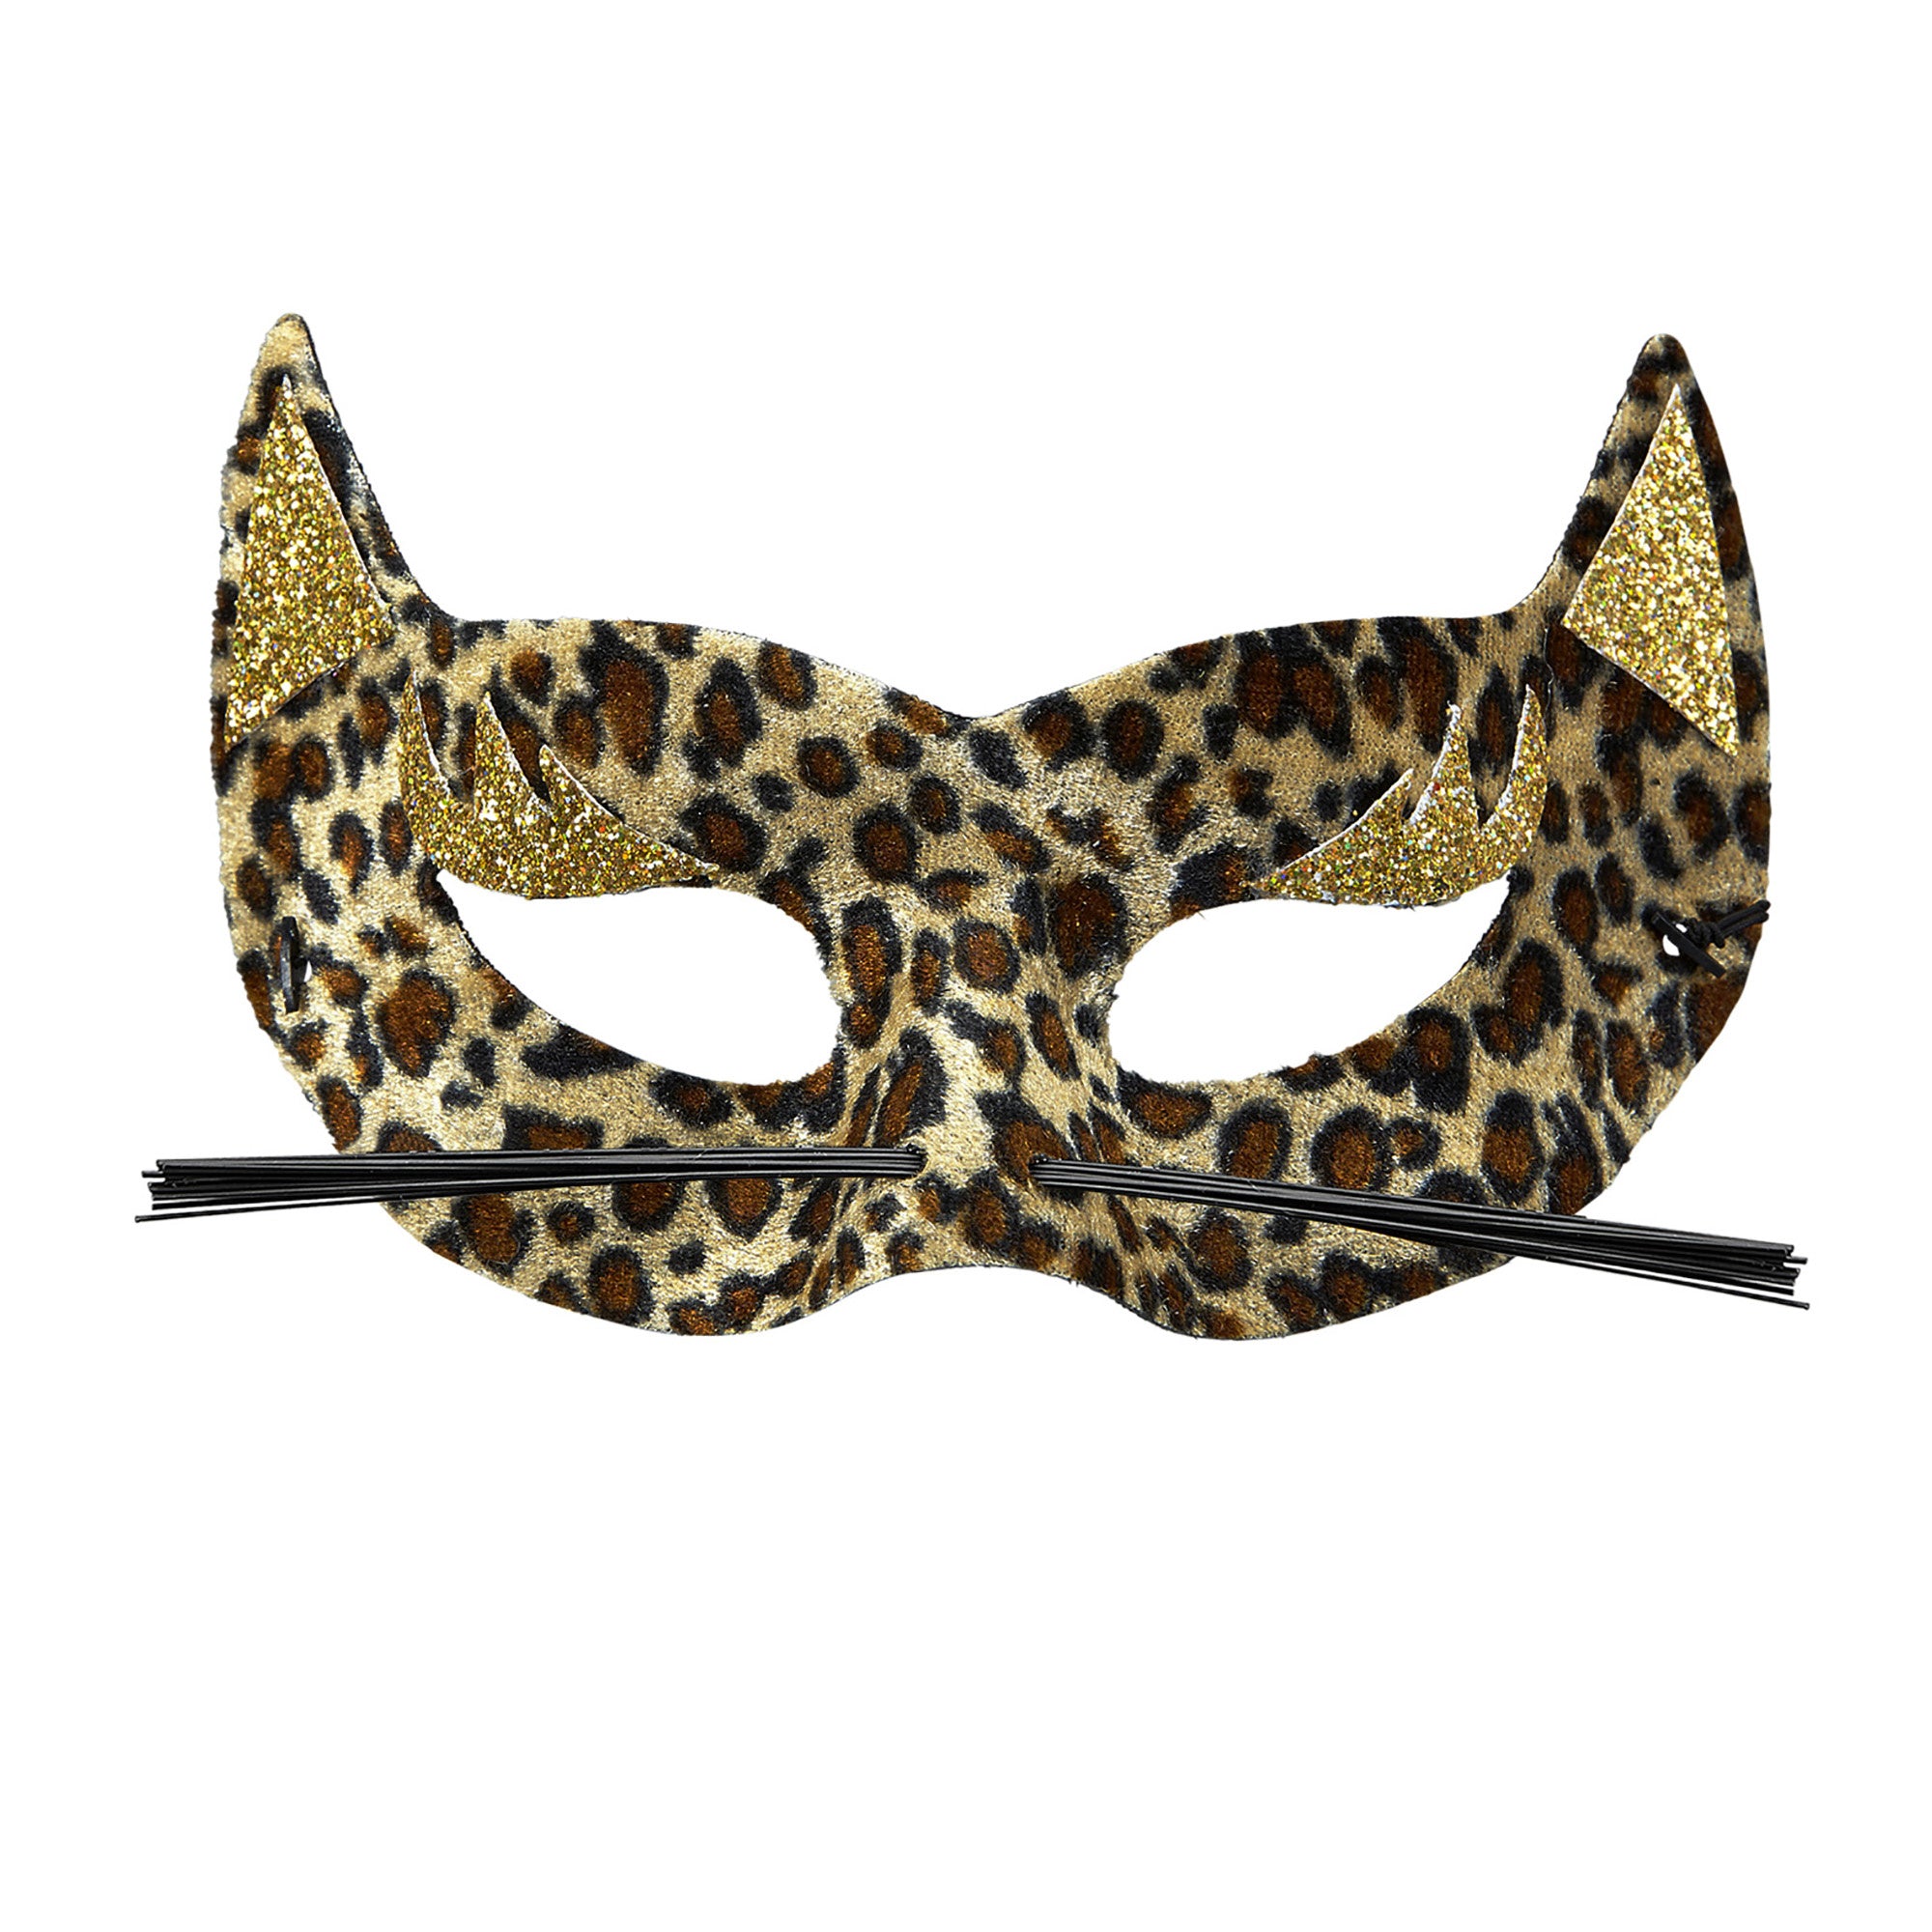 WIDMANN - Masker met luipaard print voor vrouwen - Maskers > Masquerade masker